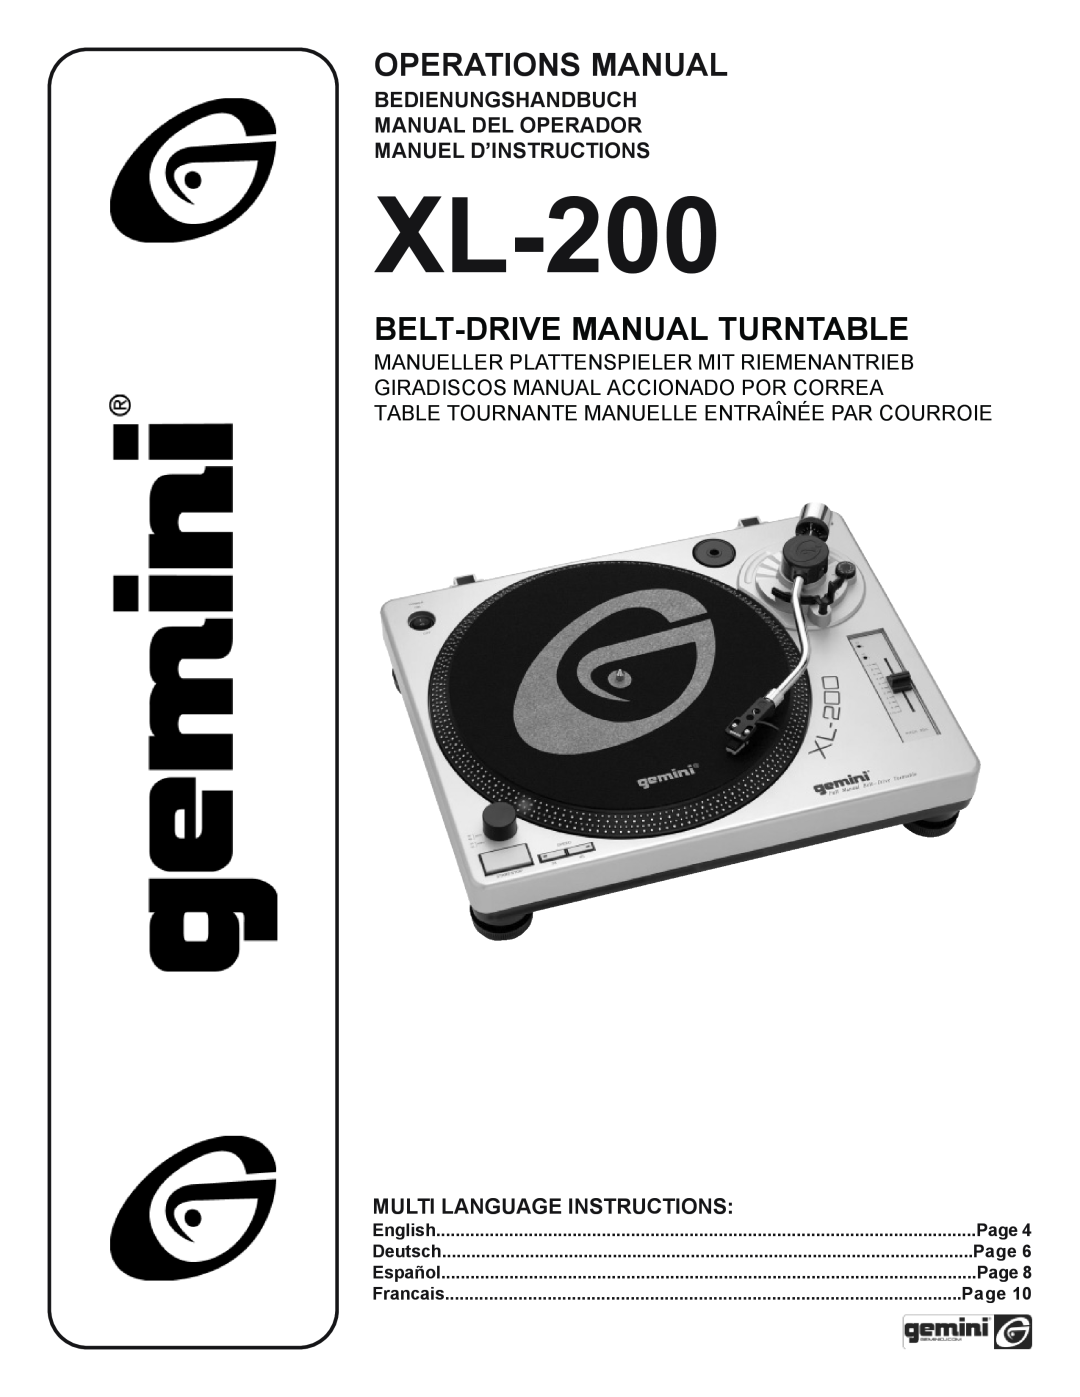 Gemini XL-200 manual Bedienungshandbuch Manual Del Operador, Manuel D’Instructions, Multi Language Instructions, Page 